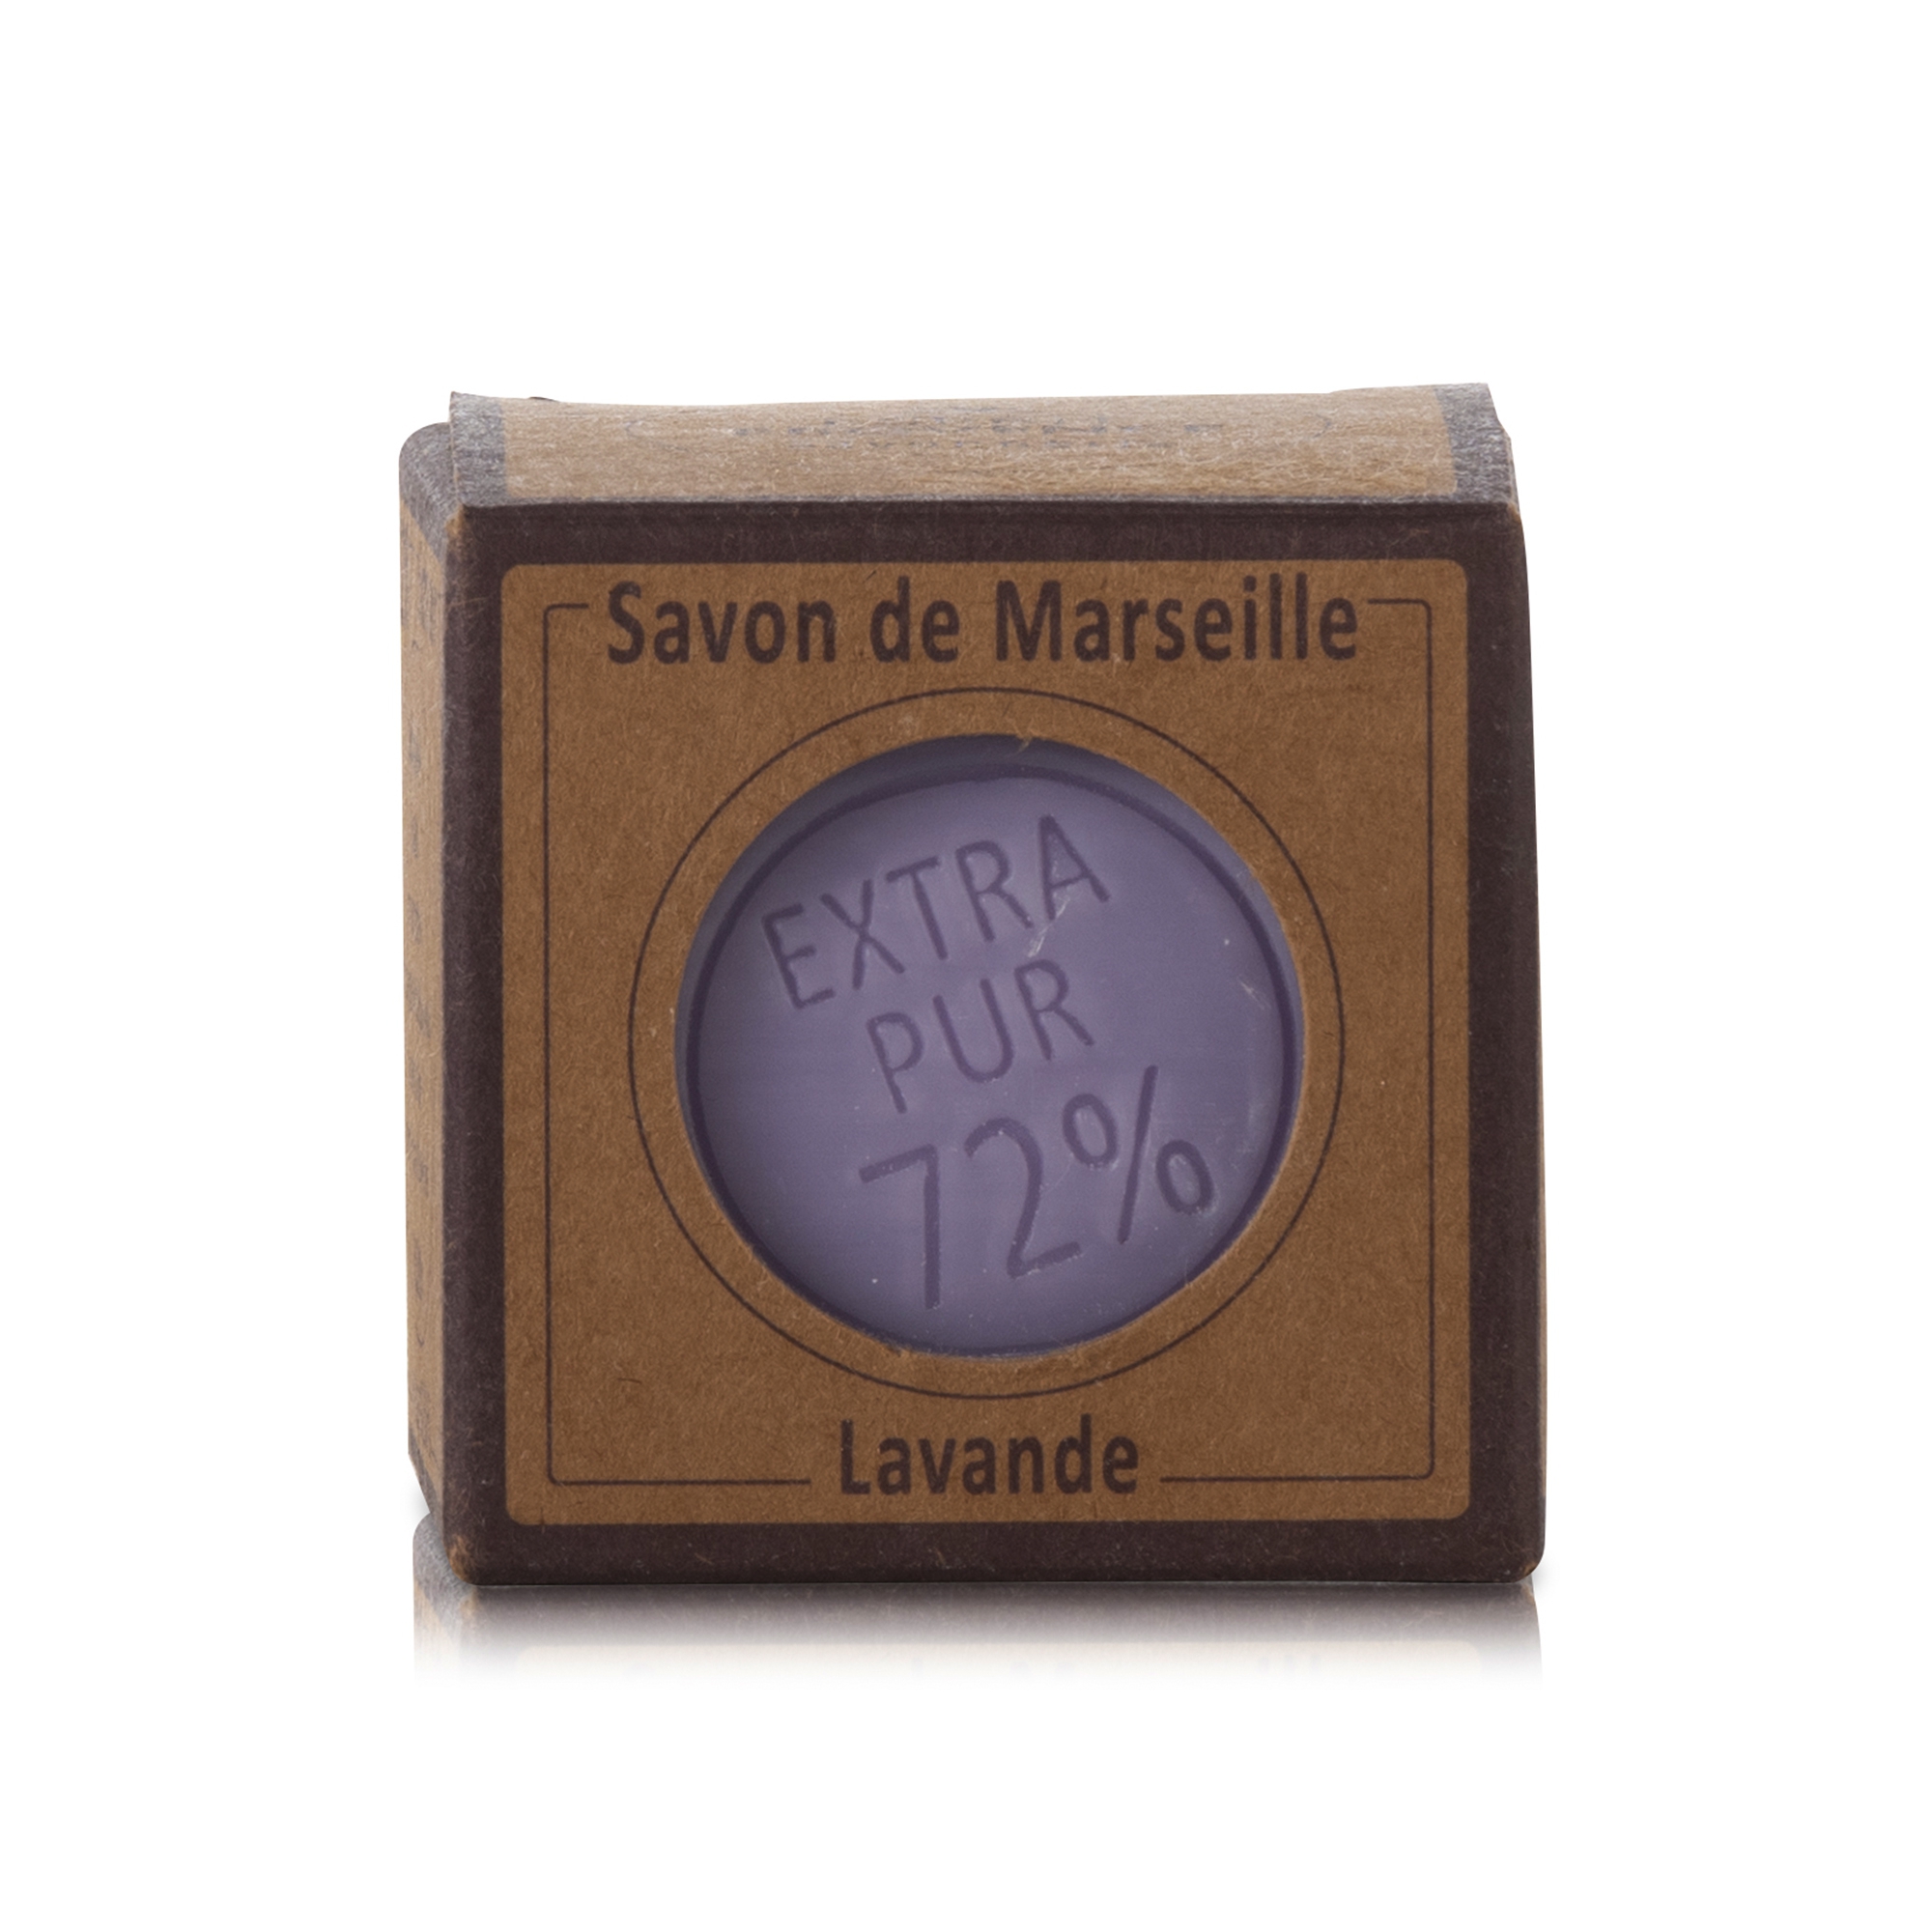 Lavendel pur - Kernseife 100g Würfel Savon de Marseille